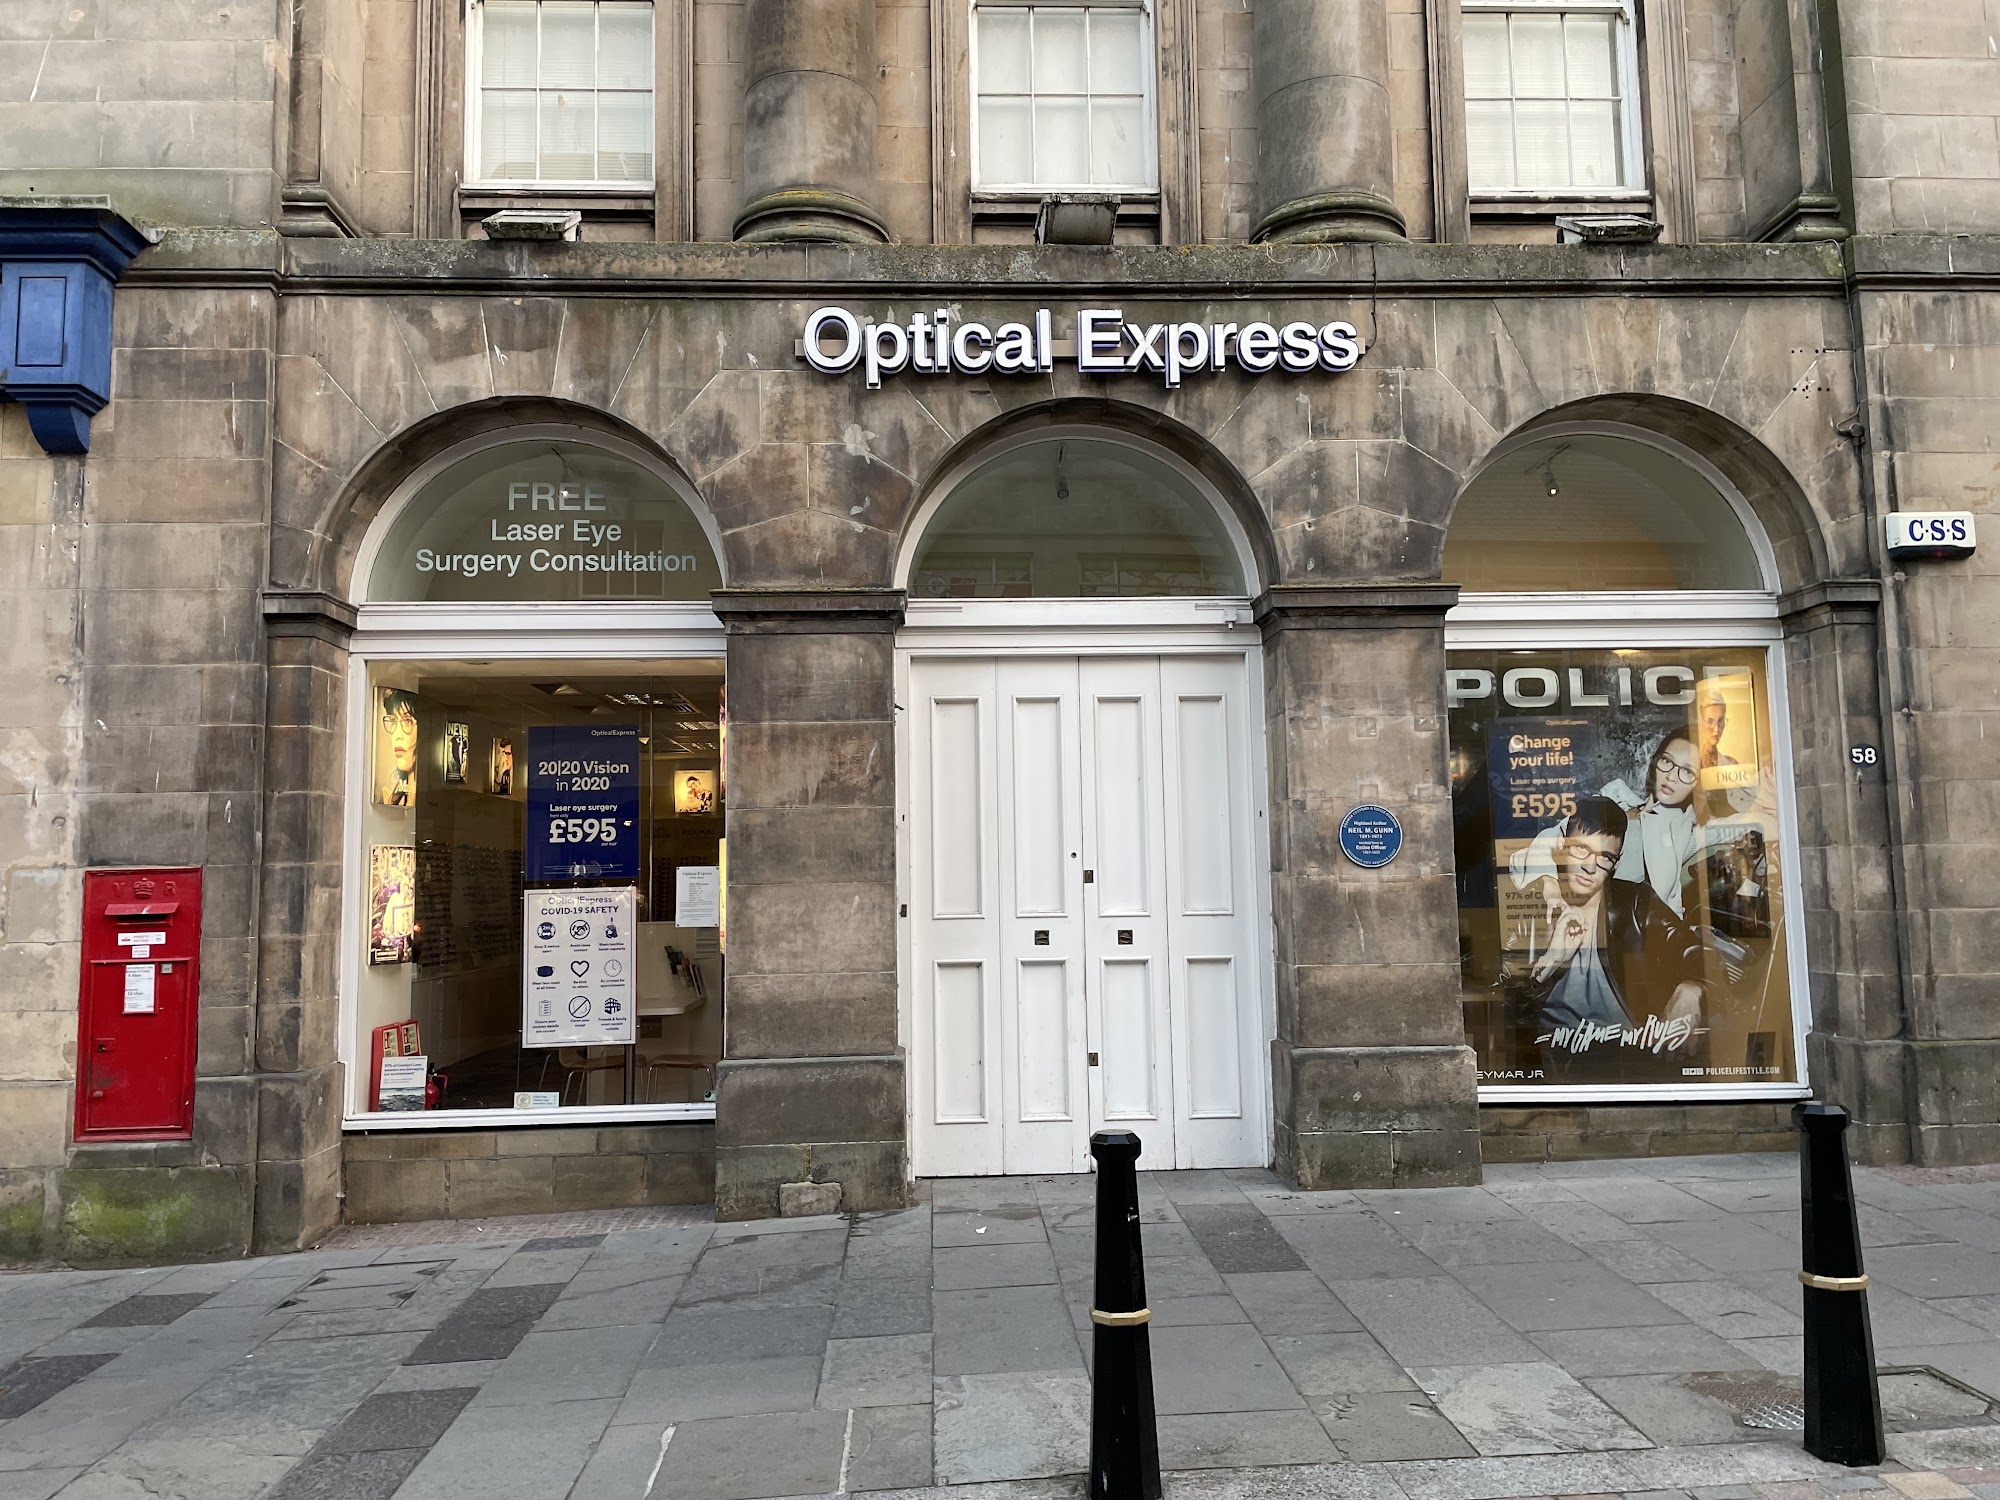 Optical Express Laser Eye Surgery, Cataract Surgery, & Opticians: Inverness